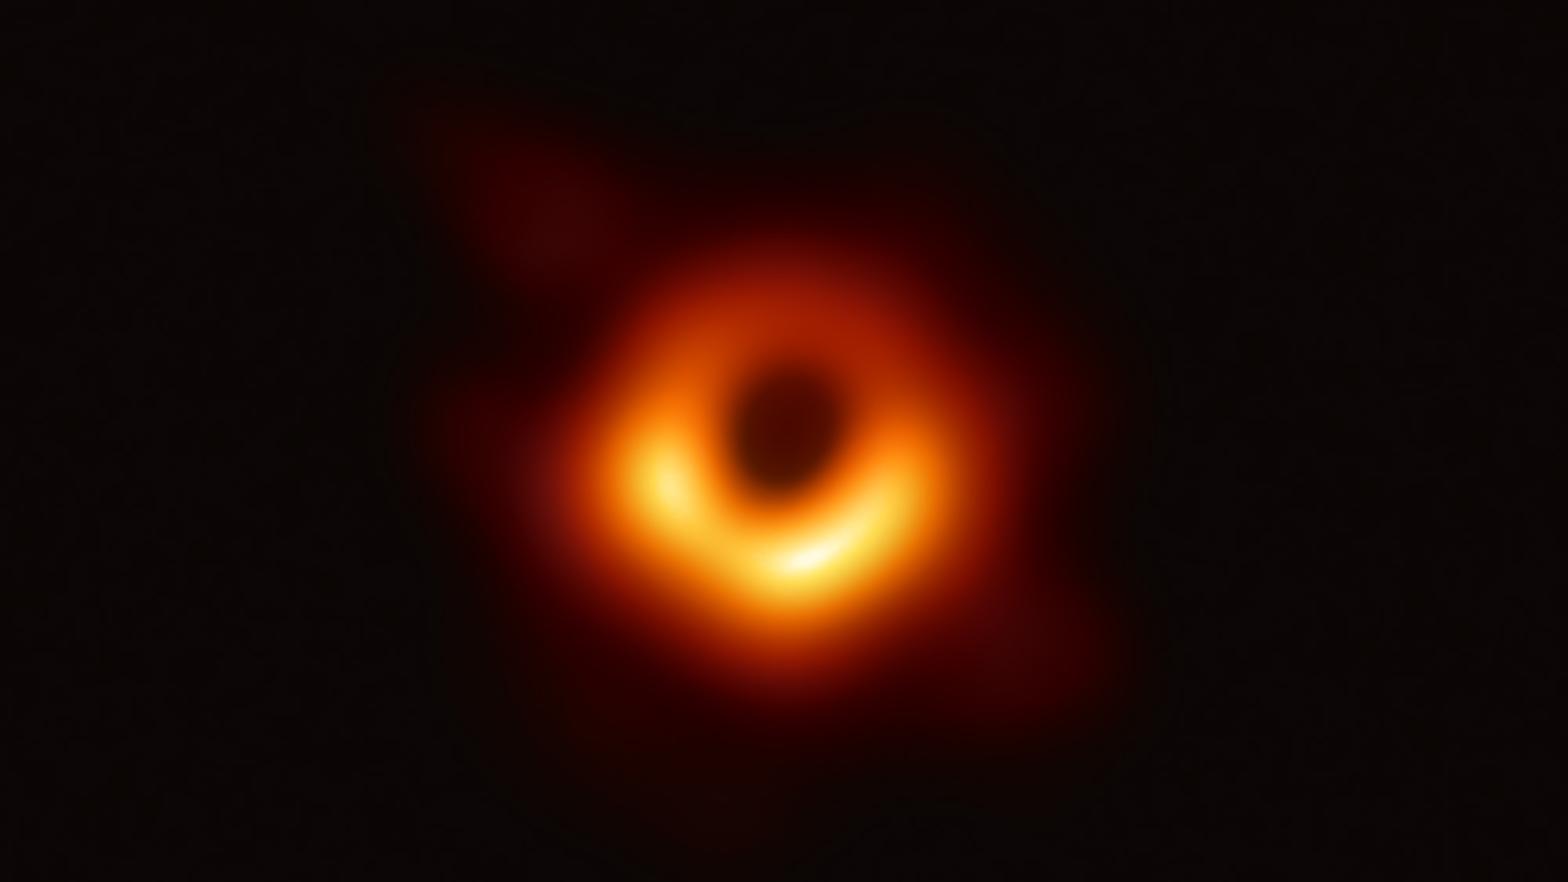 Black hole M87*. (Image: EHT Collaboration)